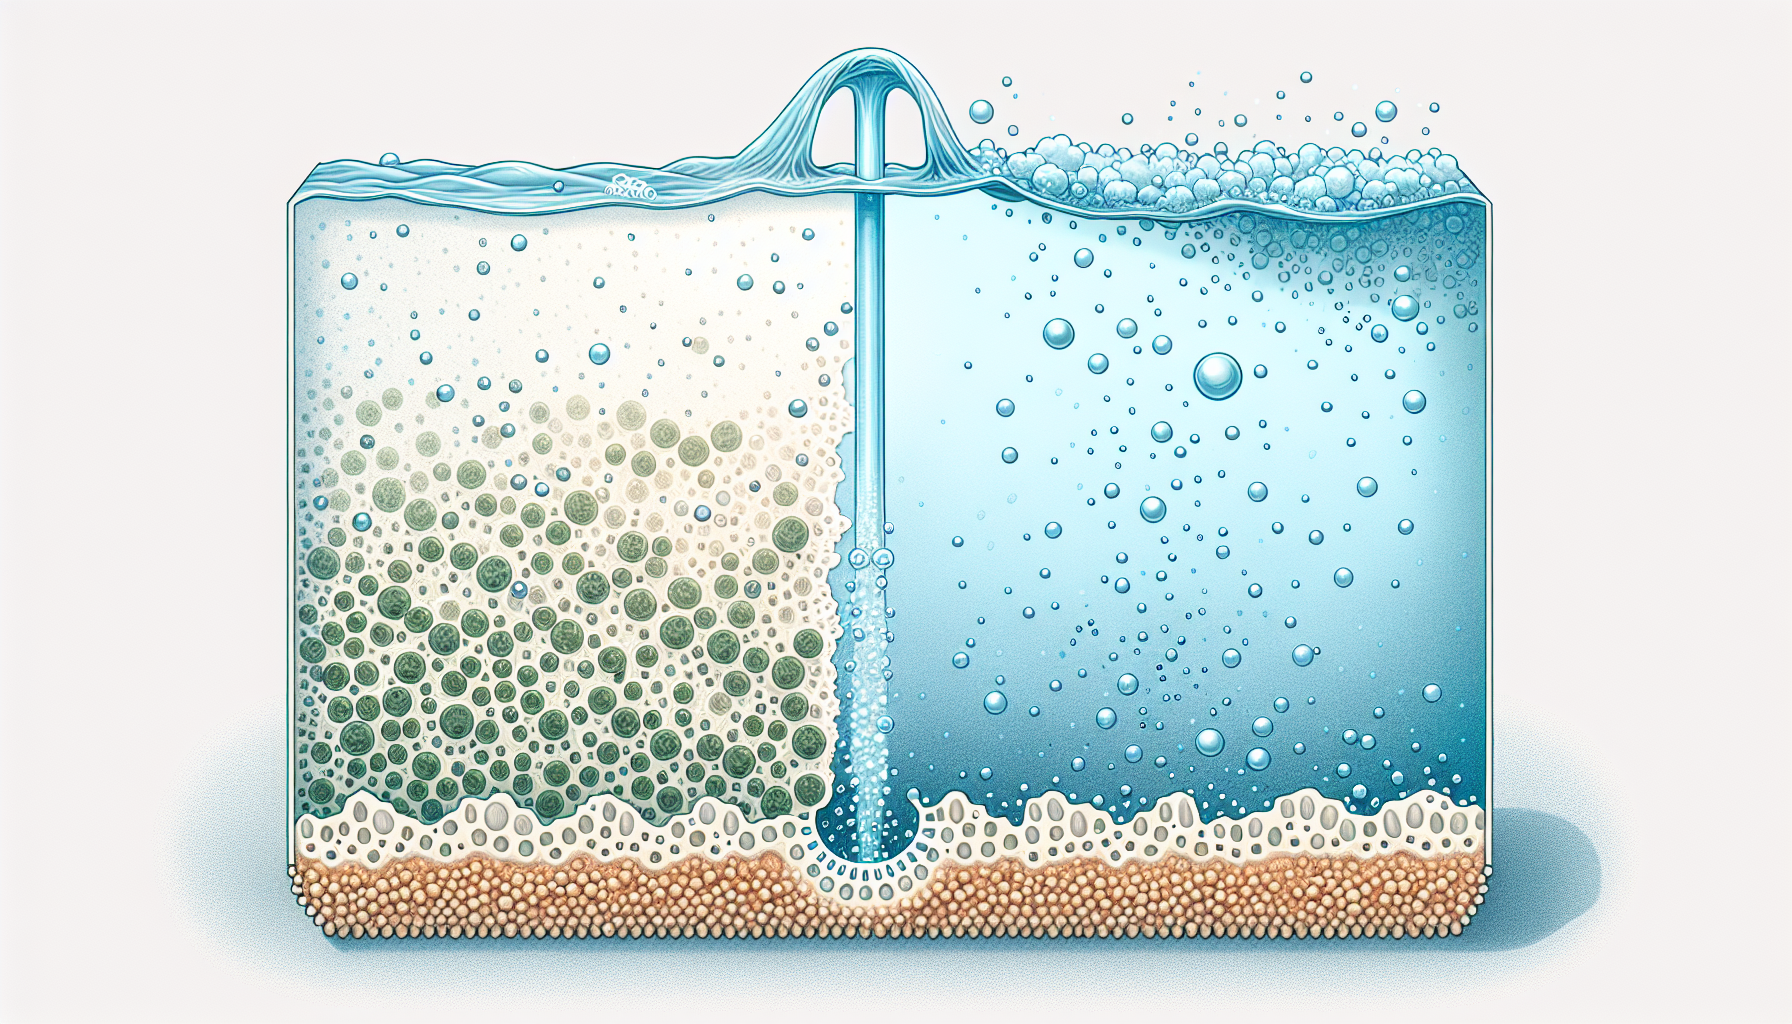 Illustration of reverse osmosis process